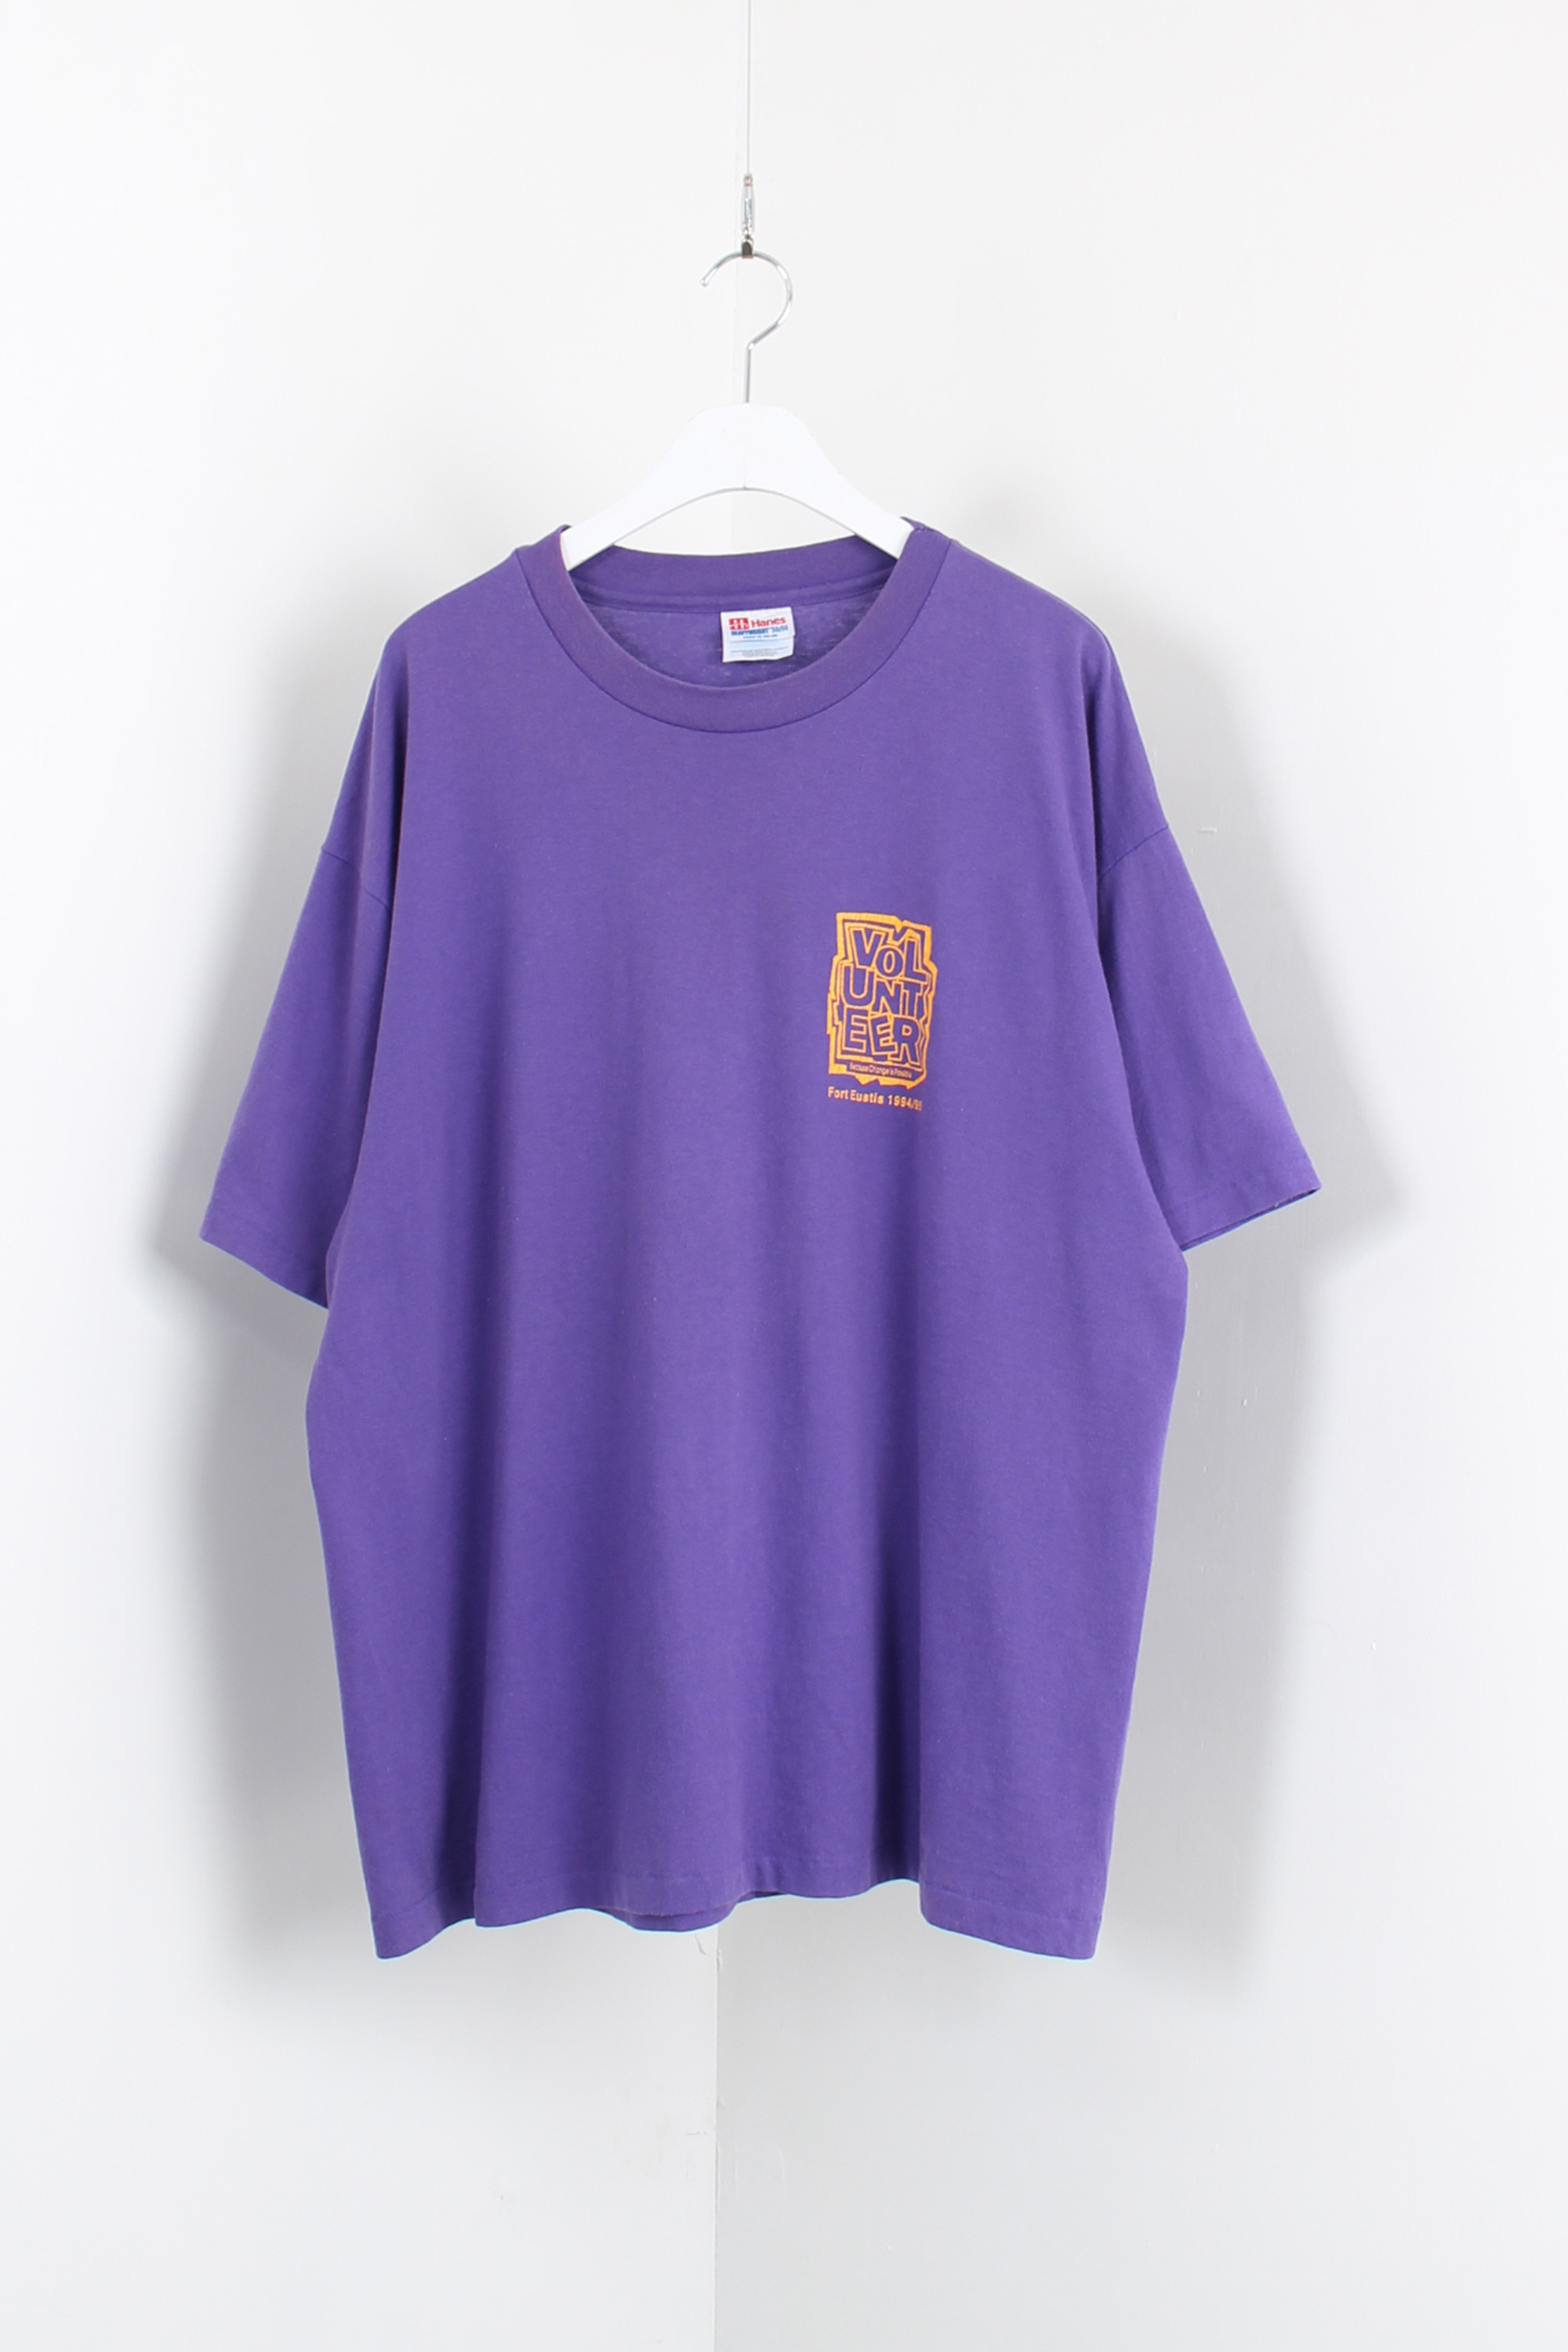 90s hanes t-shirt